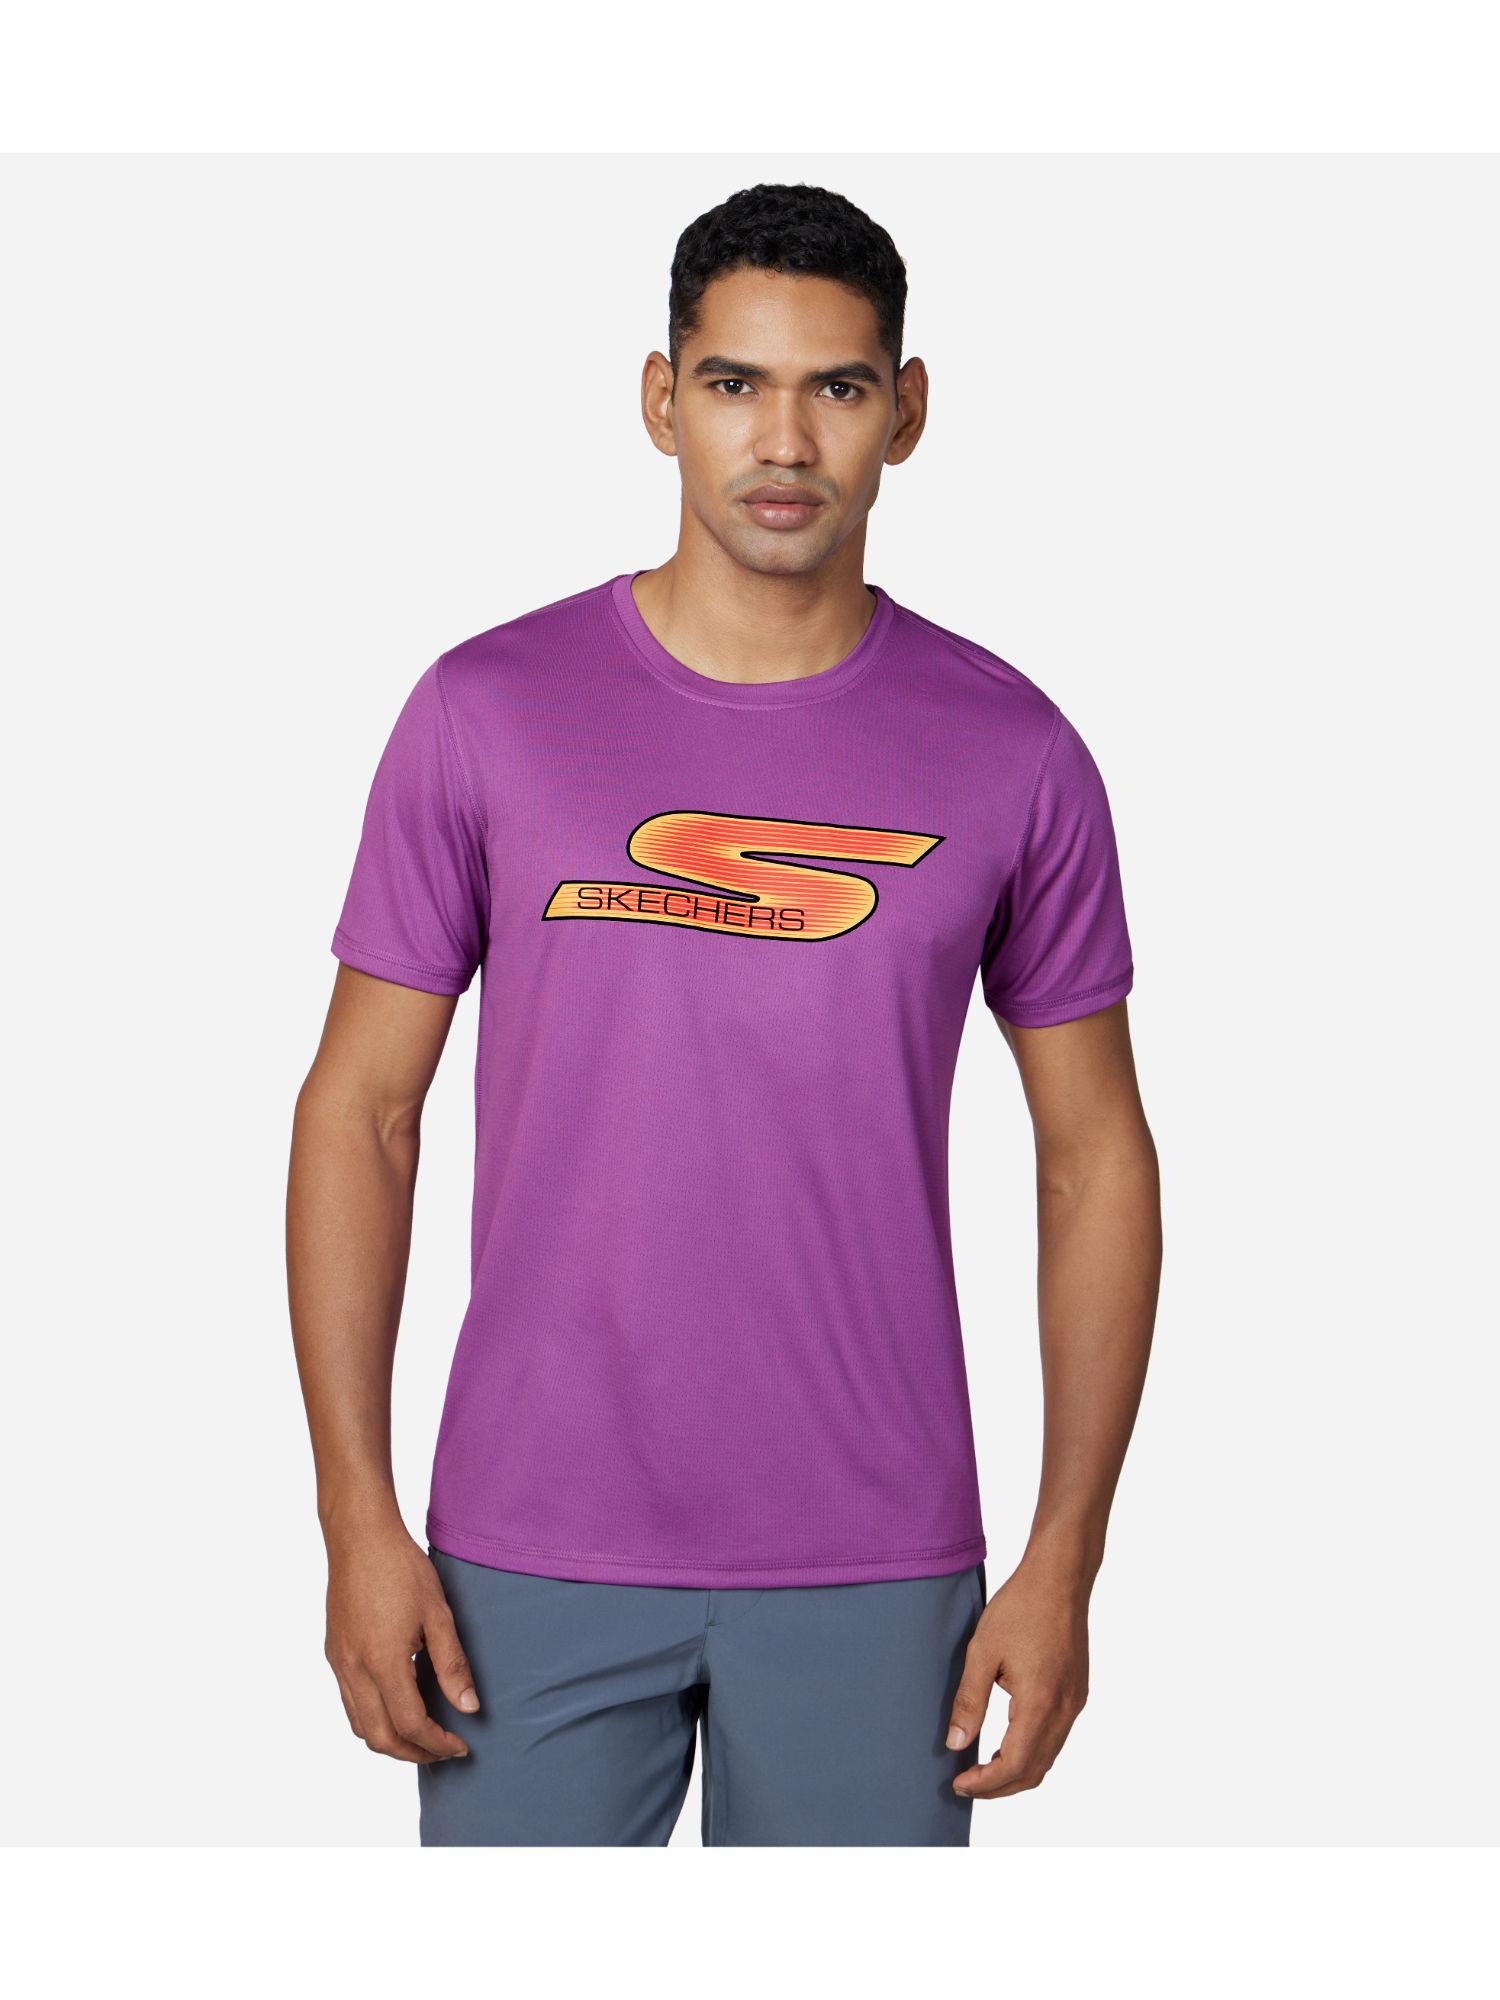 gorun razor s/s tee t-shirt purple